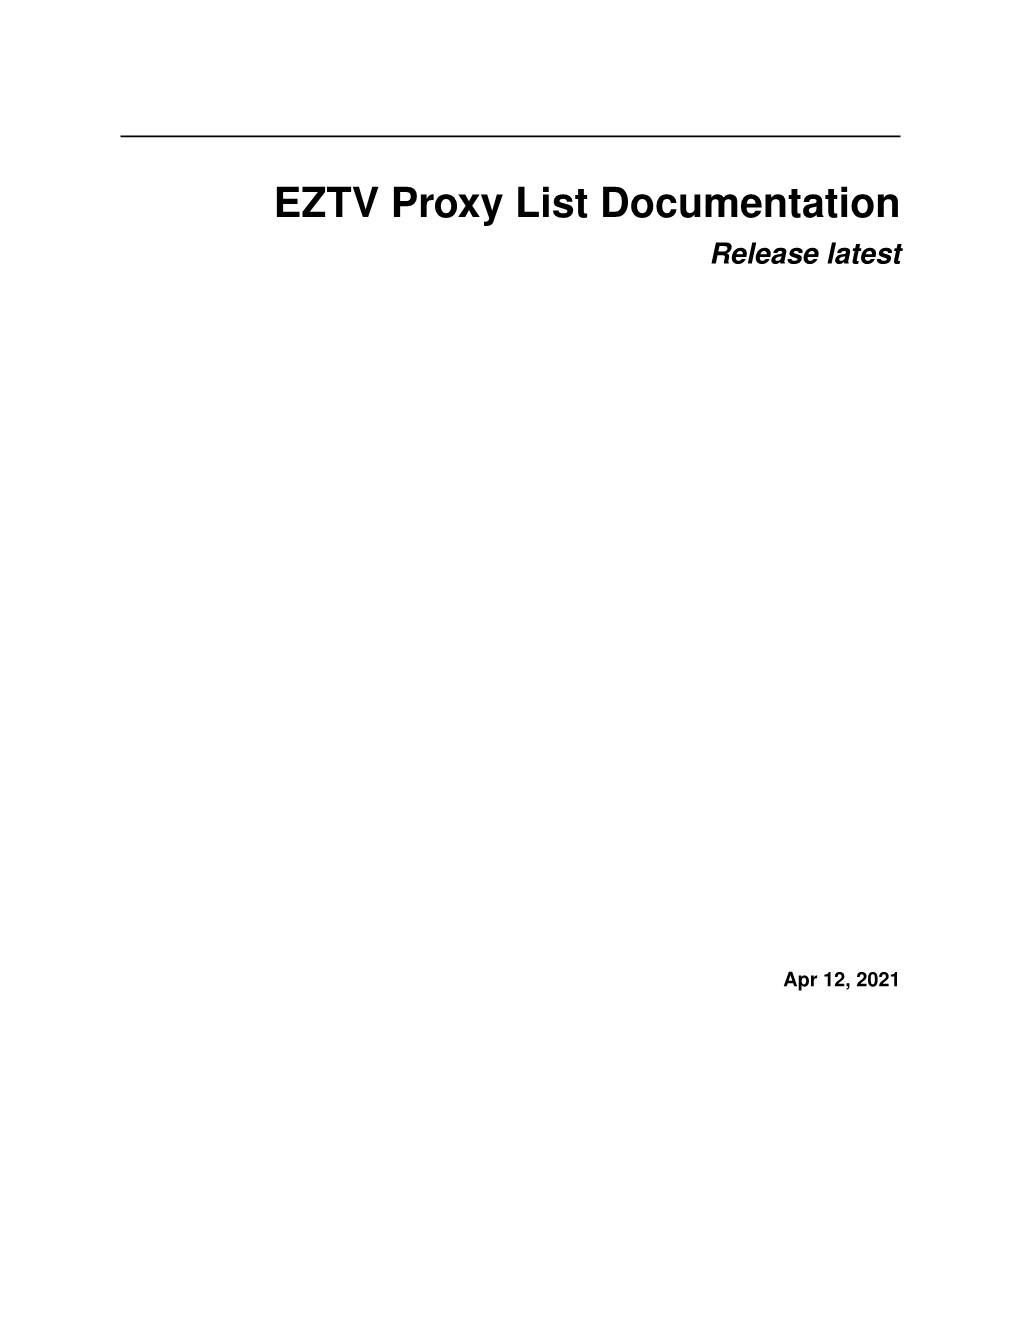 EZTV Proxy List Documentation Release Latest